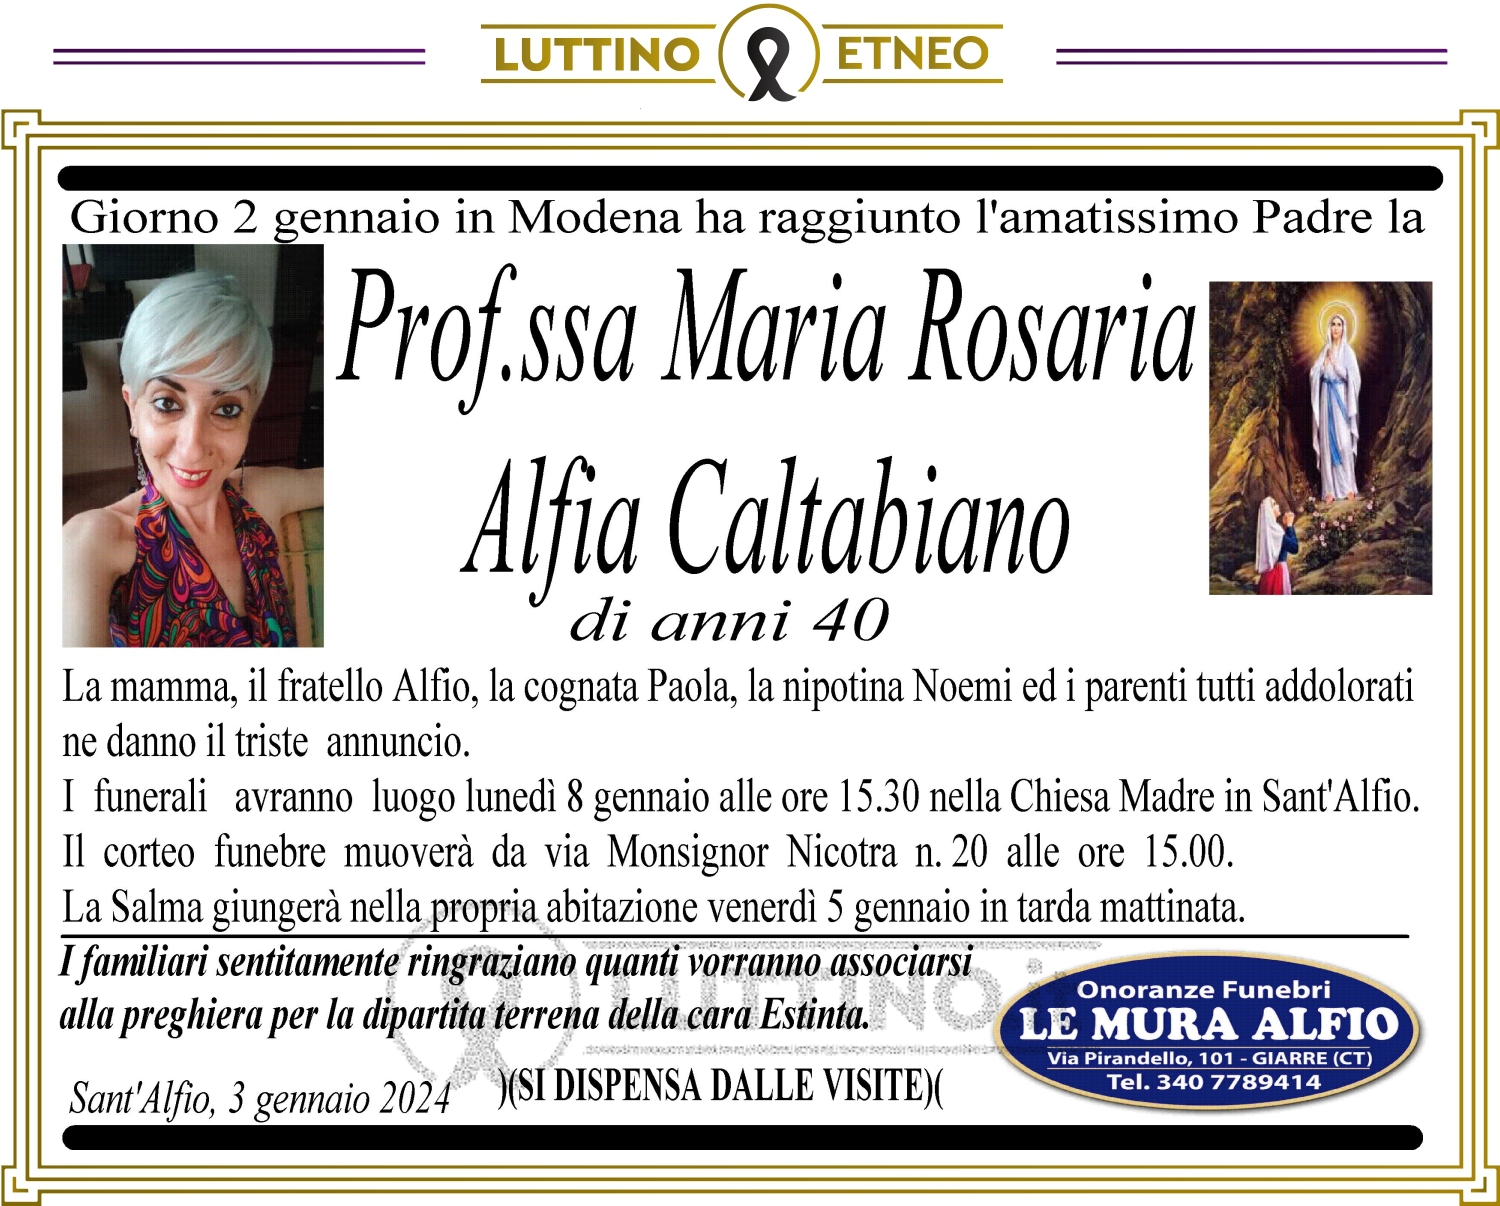 Maria Rosaria Alfia Caltabiano